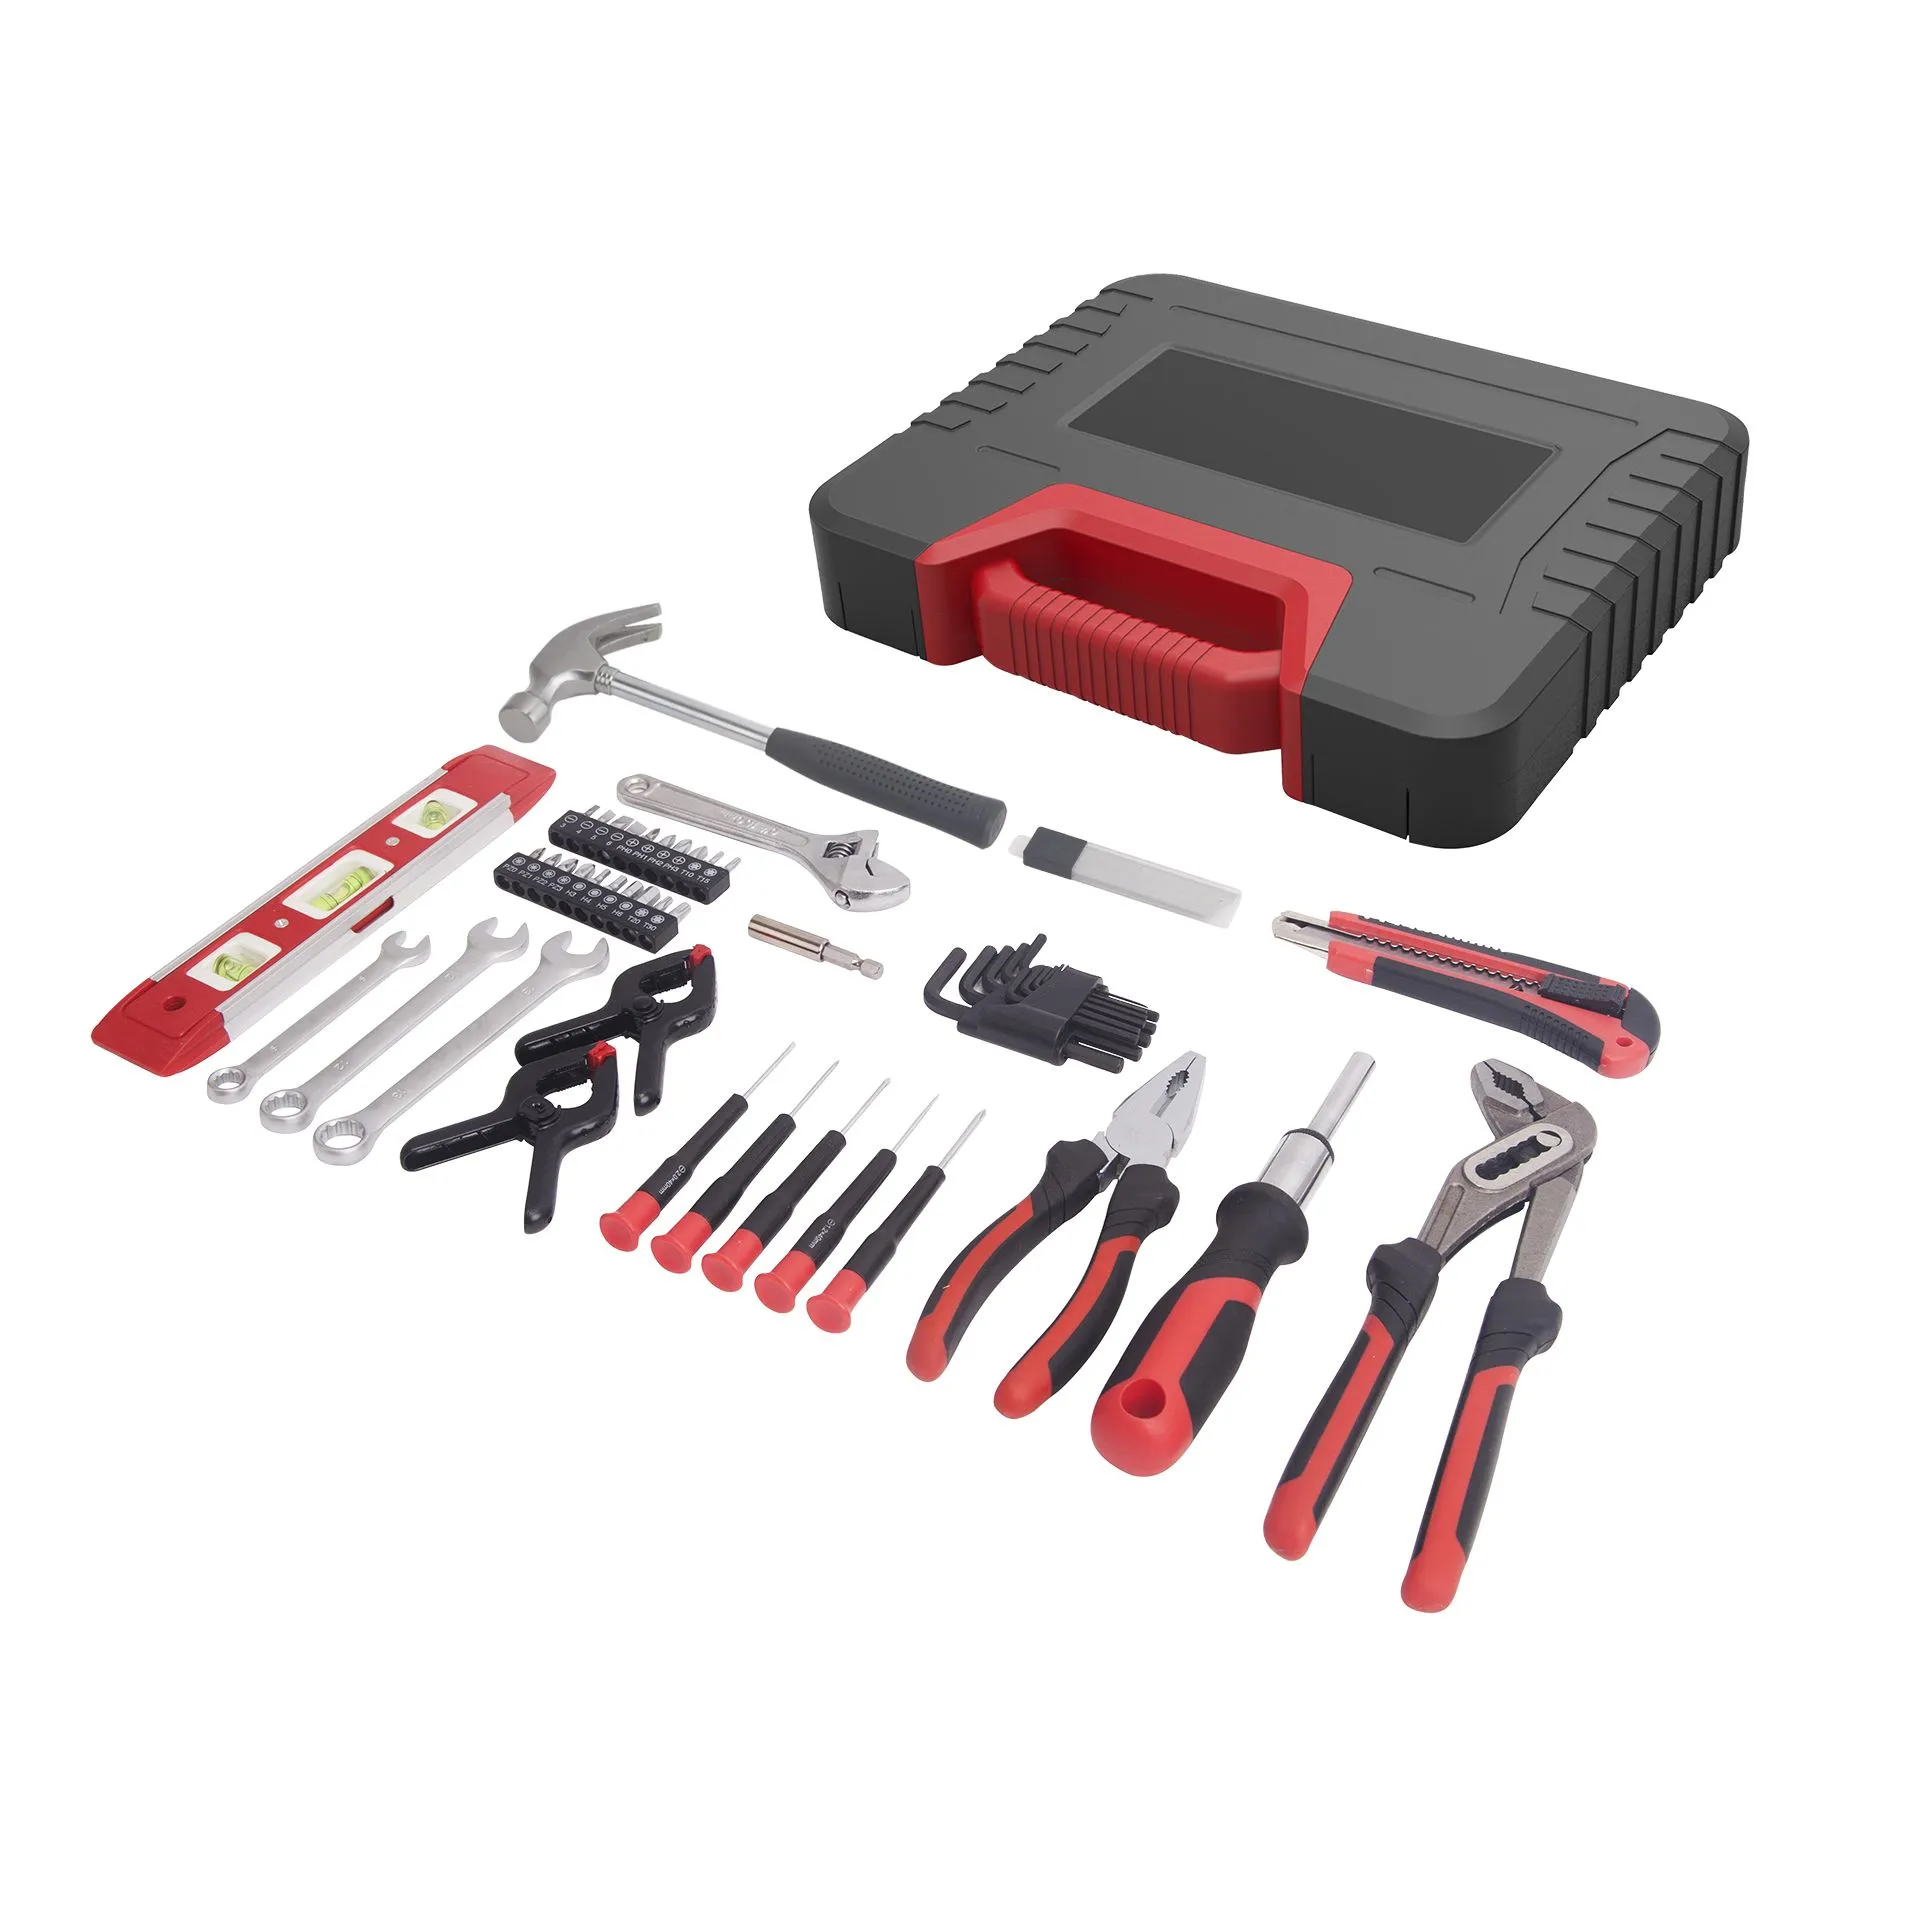 50 piece Hand tool kit